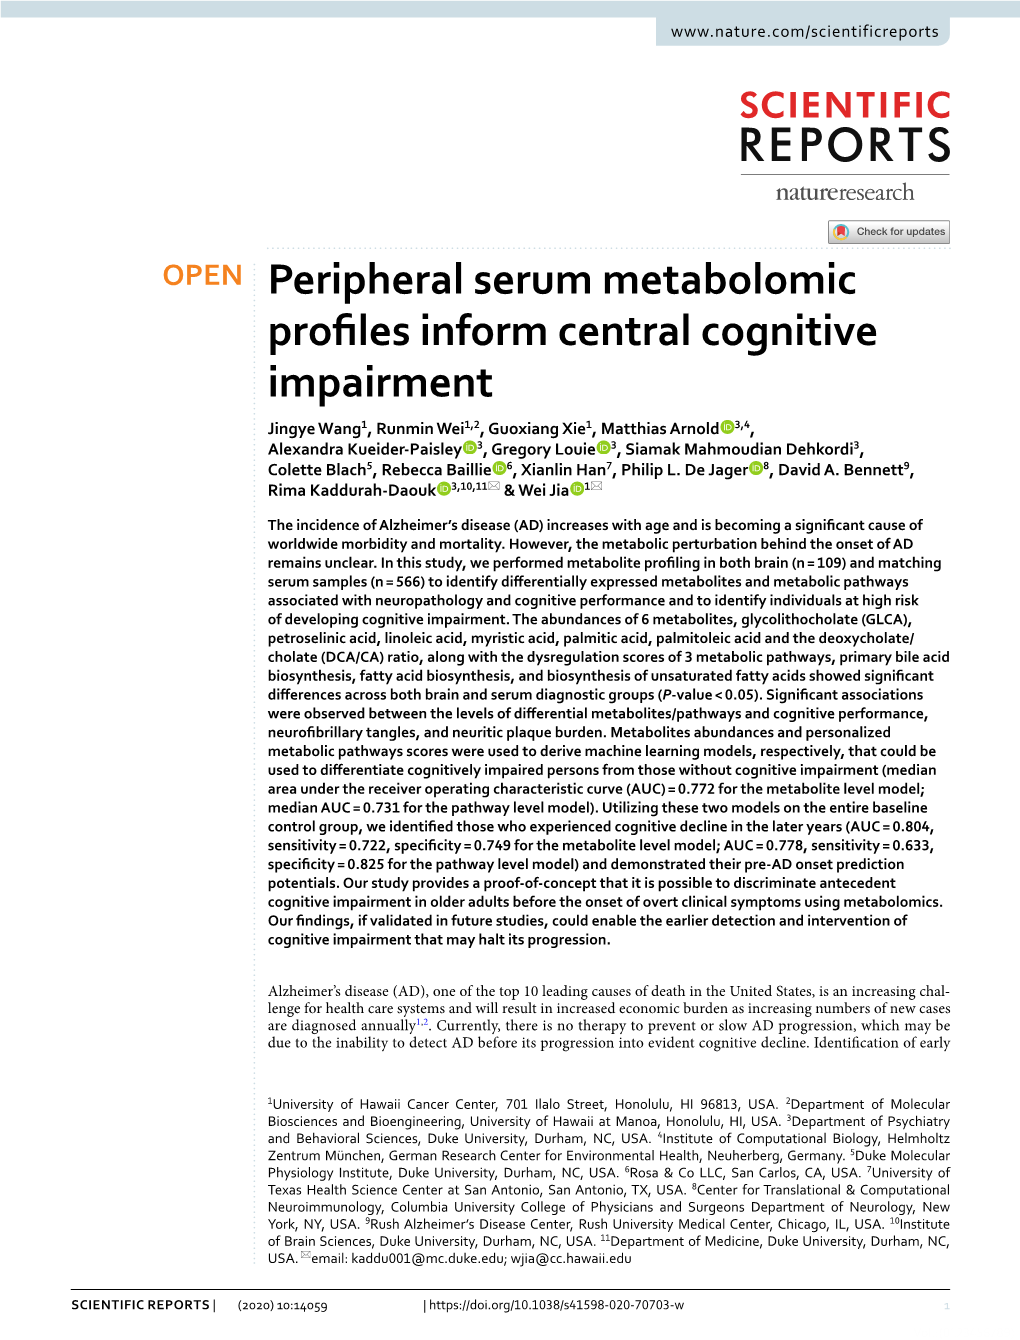 Peripheral Serum Metabolomic Profiles Inform Central Cognitive